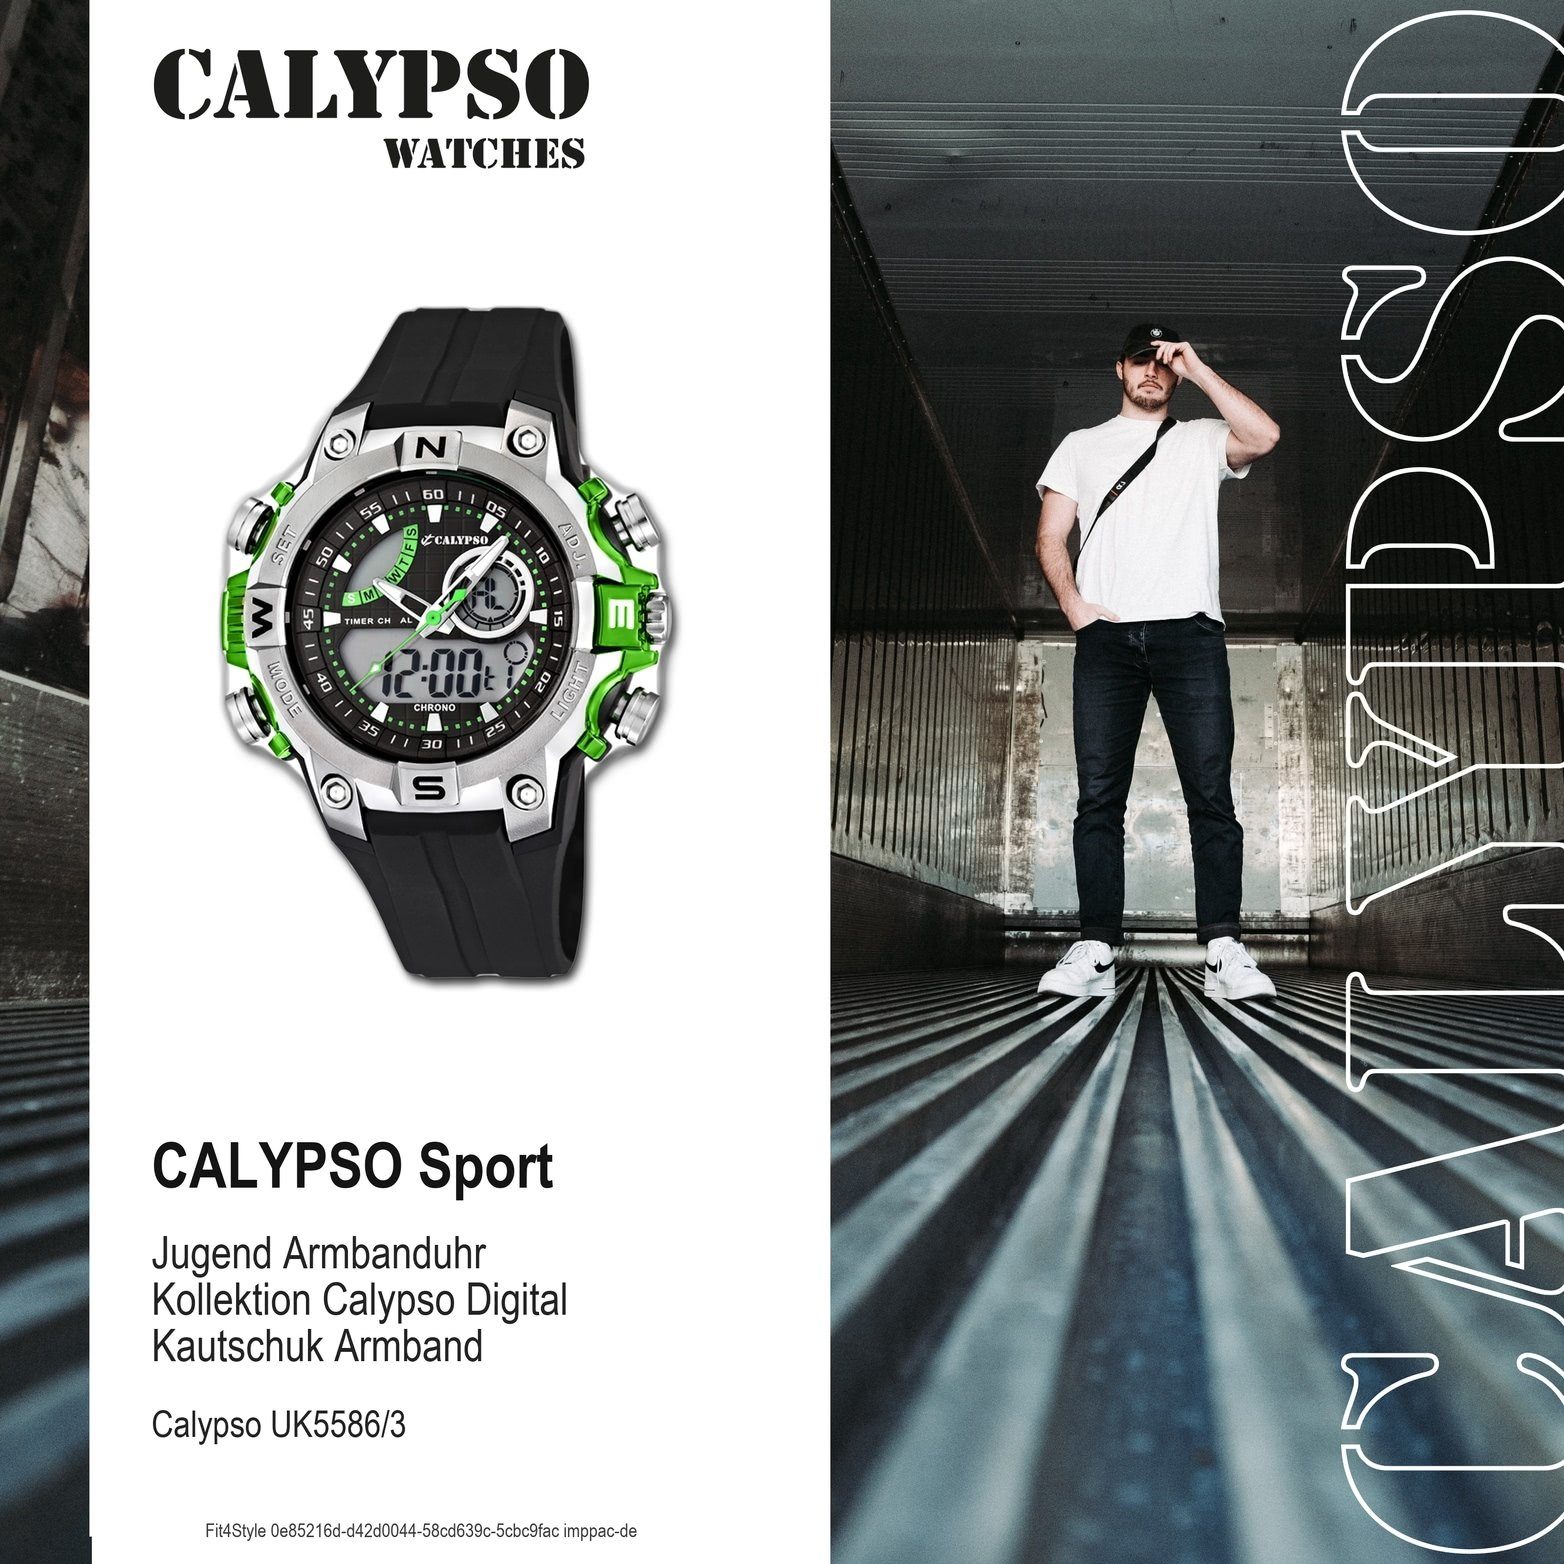 Kinder Kinderuhren CALYPSO WATCHES Quarzuhr D2UK5586/3 Calypso Kunststoff Jugend Uhr K5586/3, Jugenduhr mit Kautschukarmband, ru